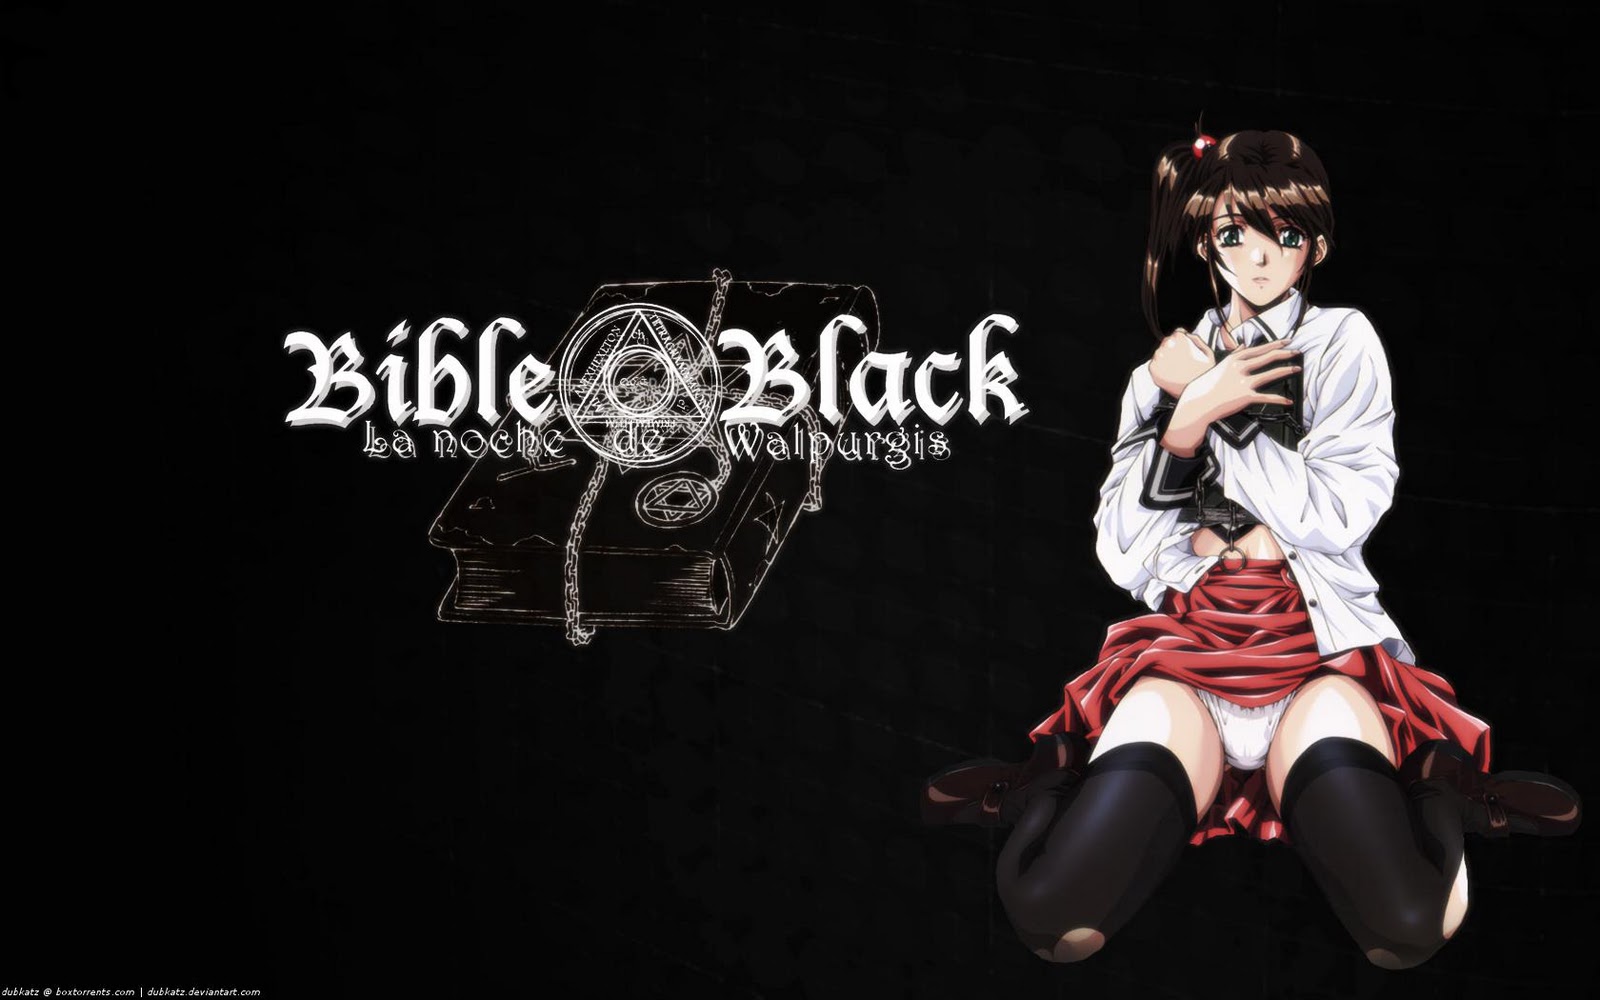 Bible black